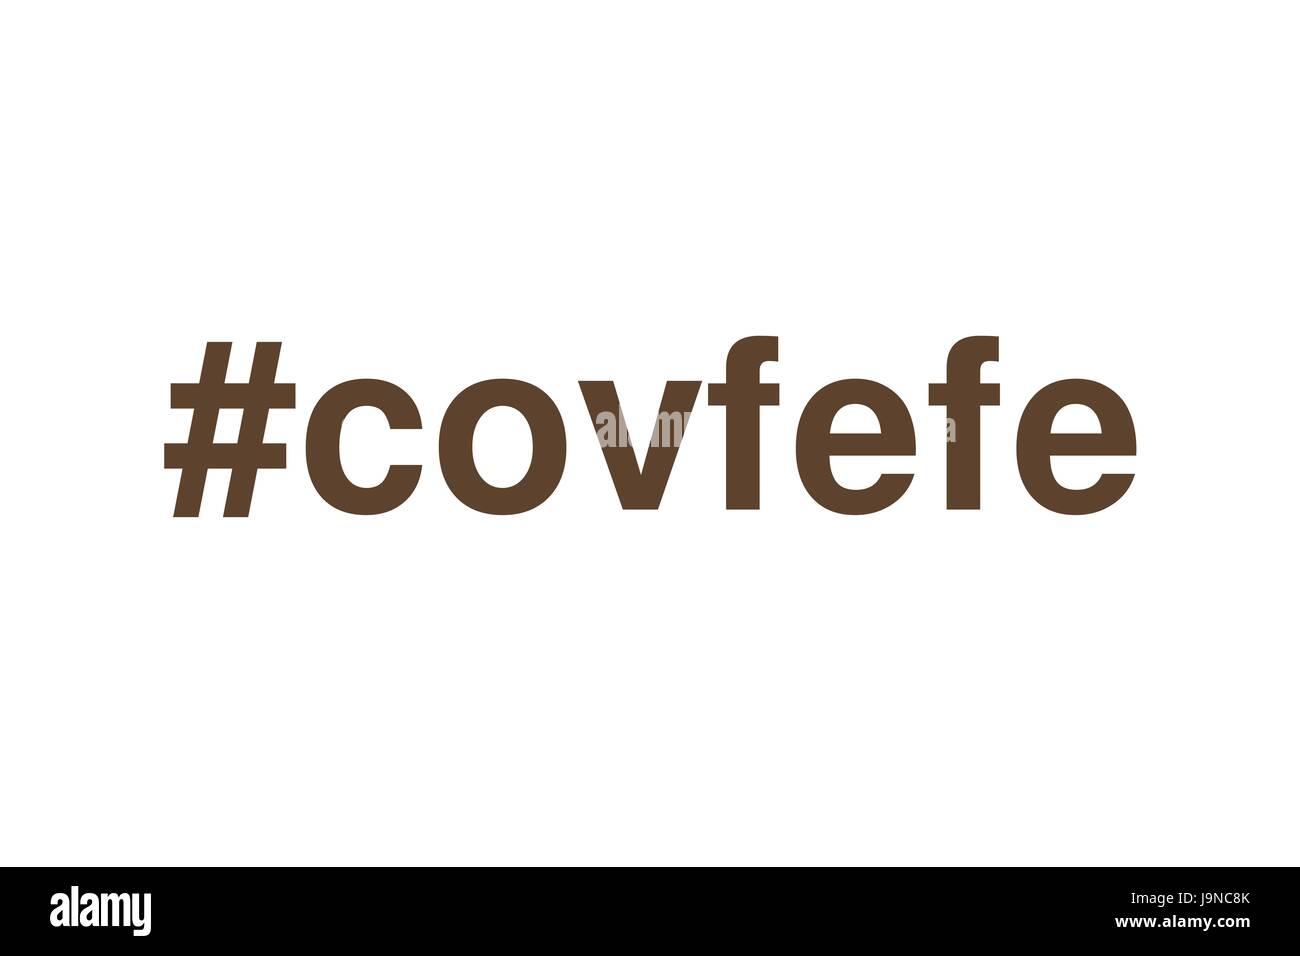 US President Hashtag Covfefe Tweet Label Typo Stock Photo